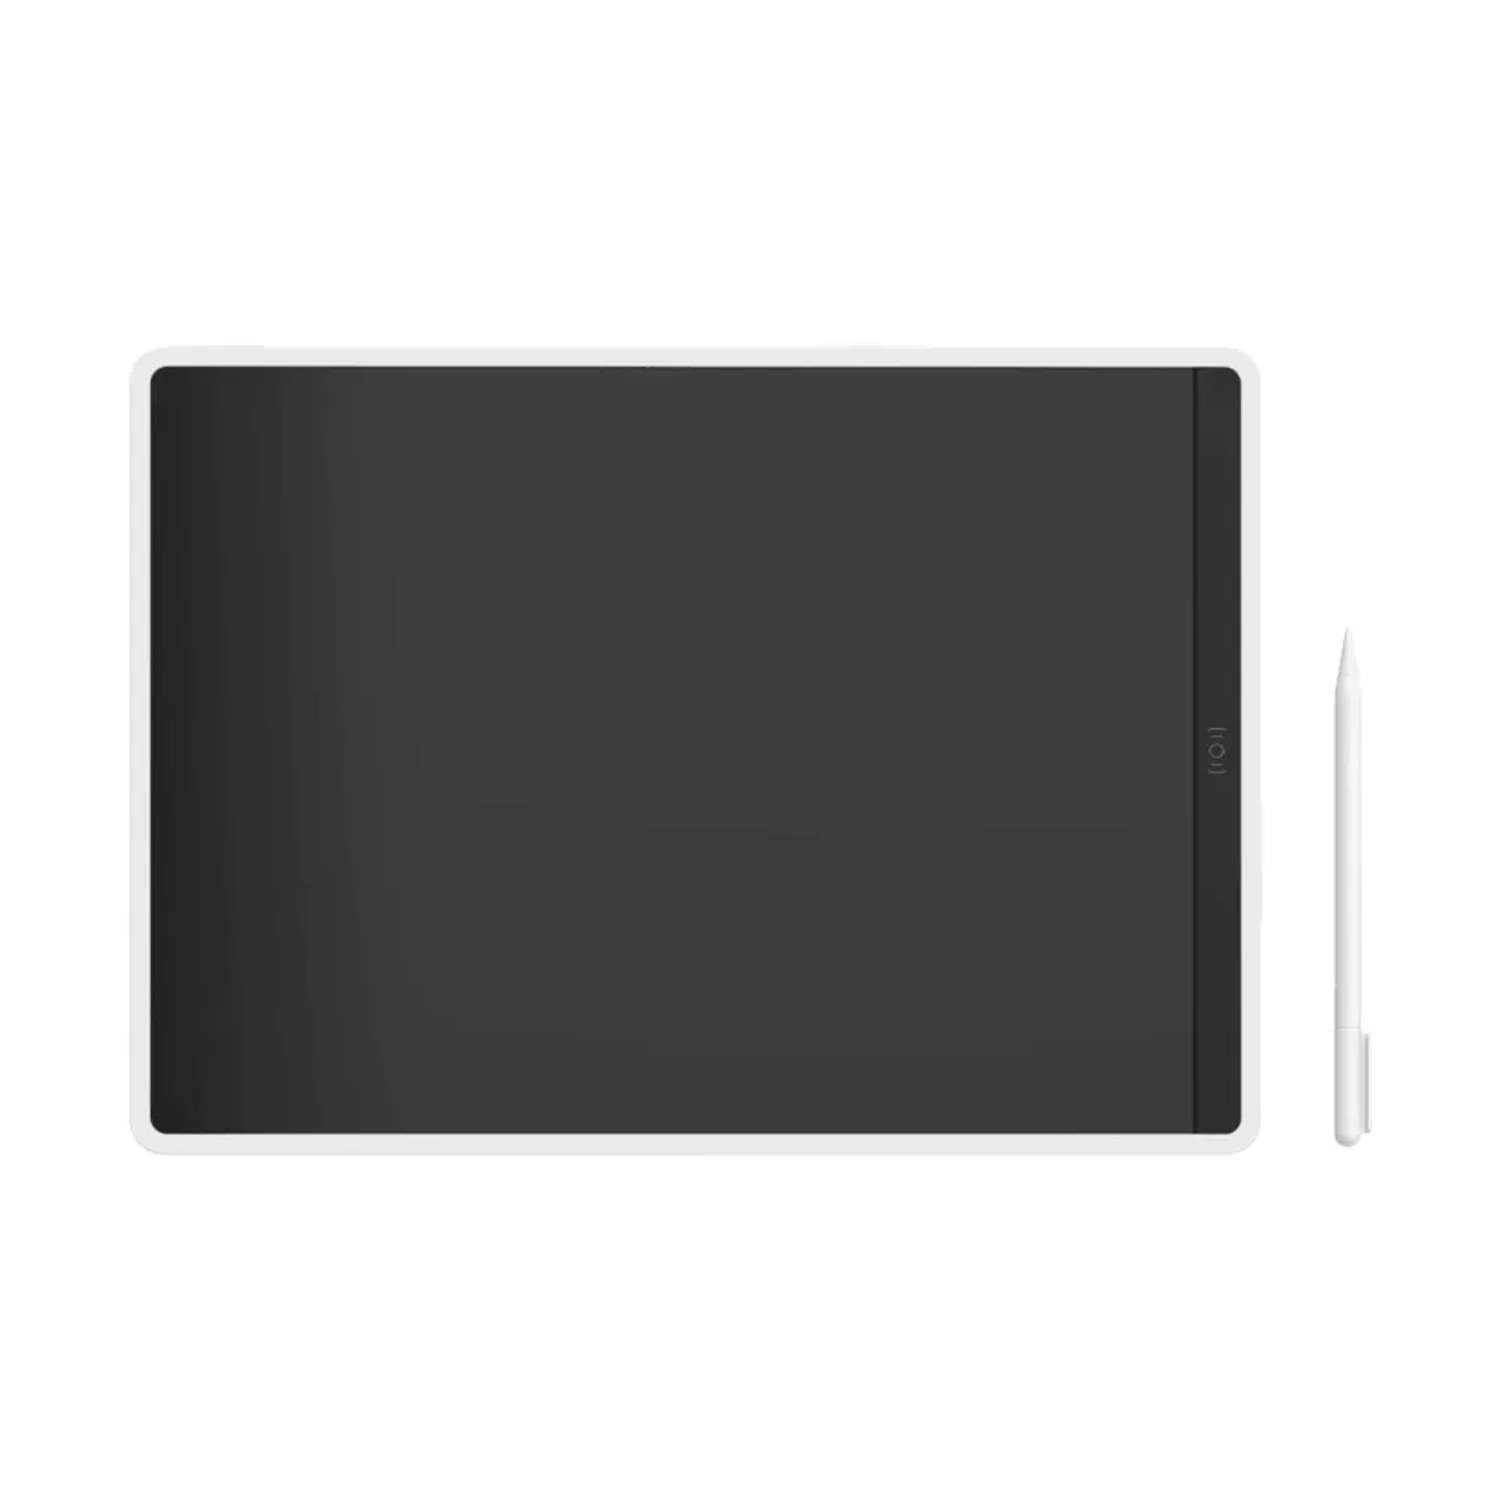 Графический планшет XIAOMI LCD Writing Tablet 13.5 дюймов - фото 5